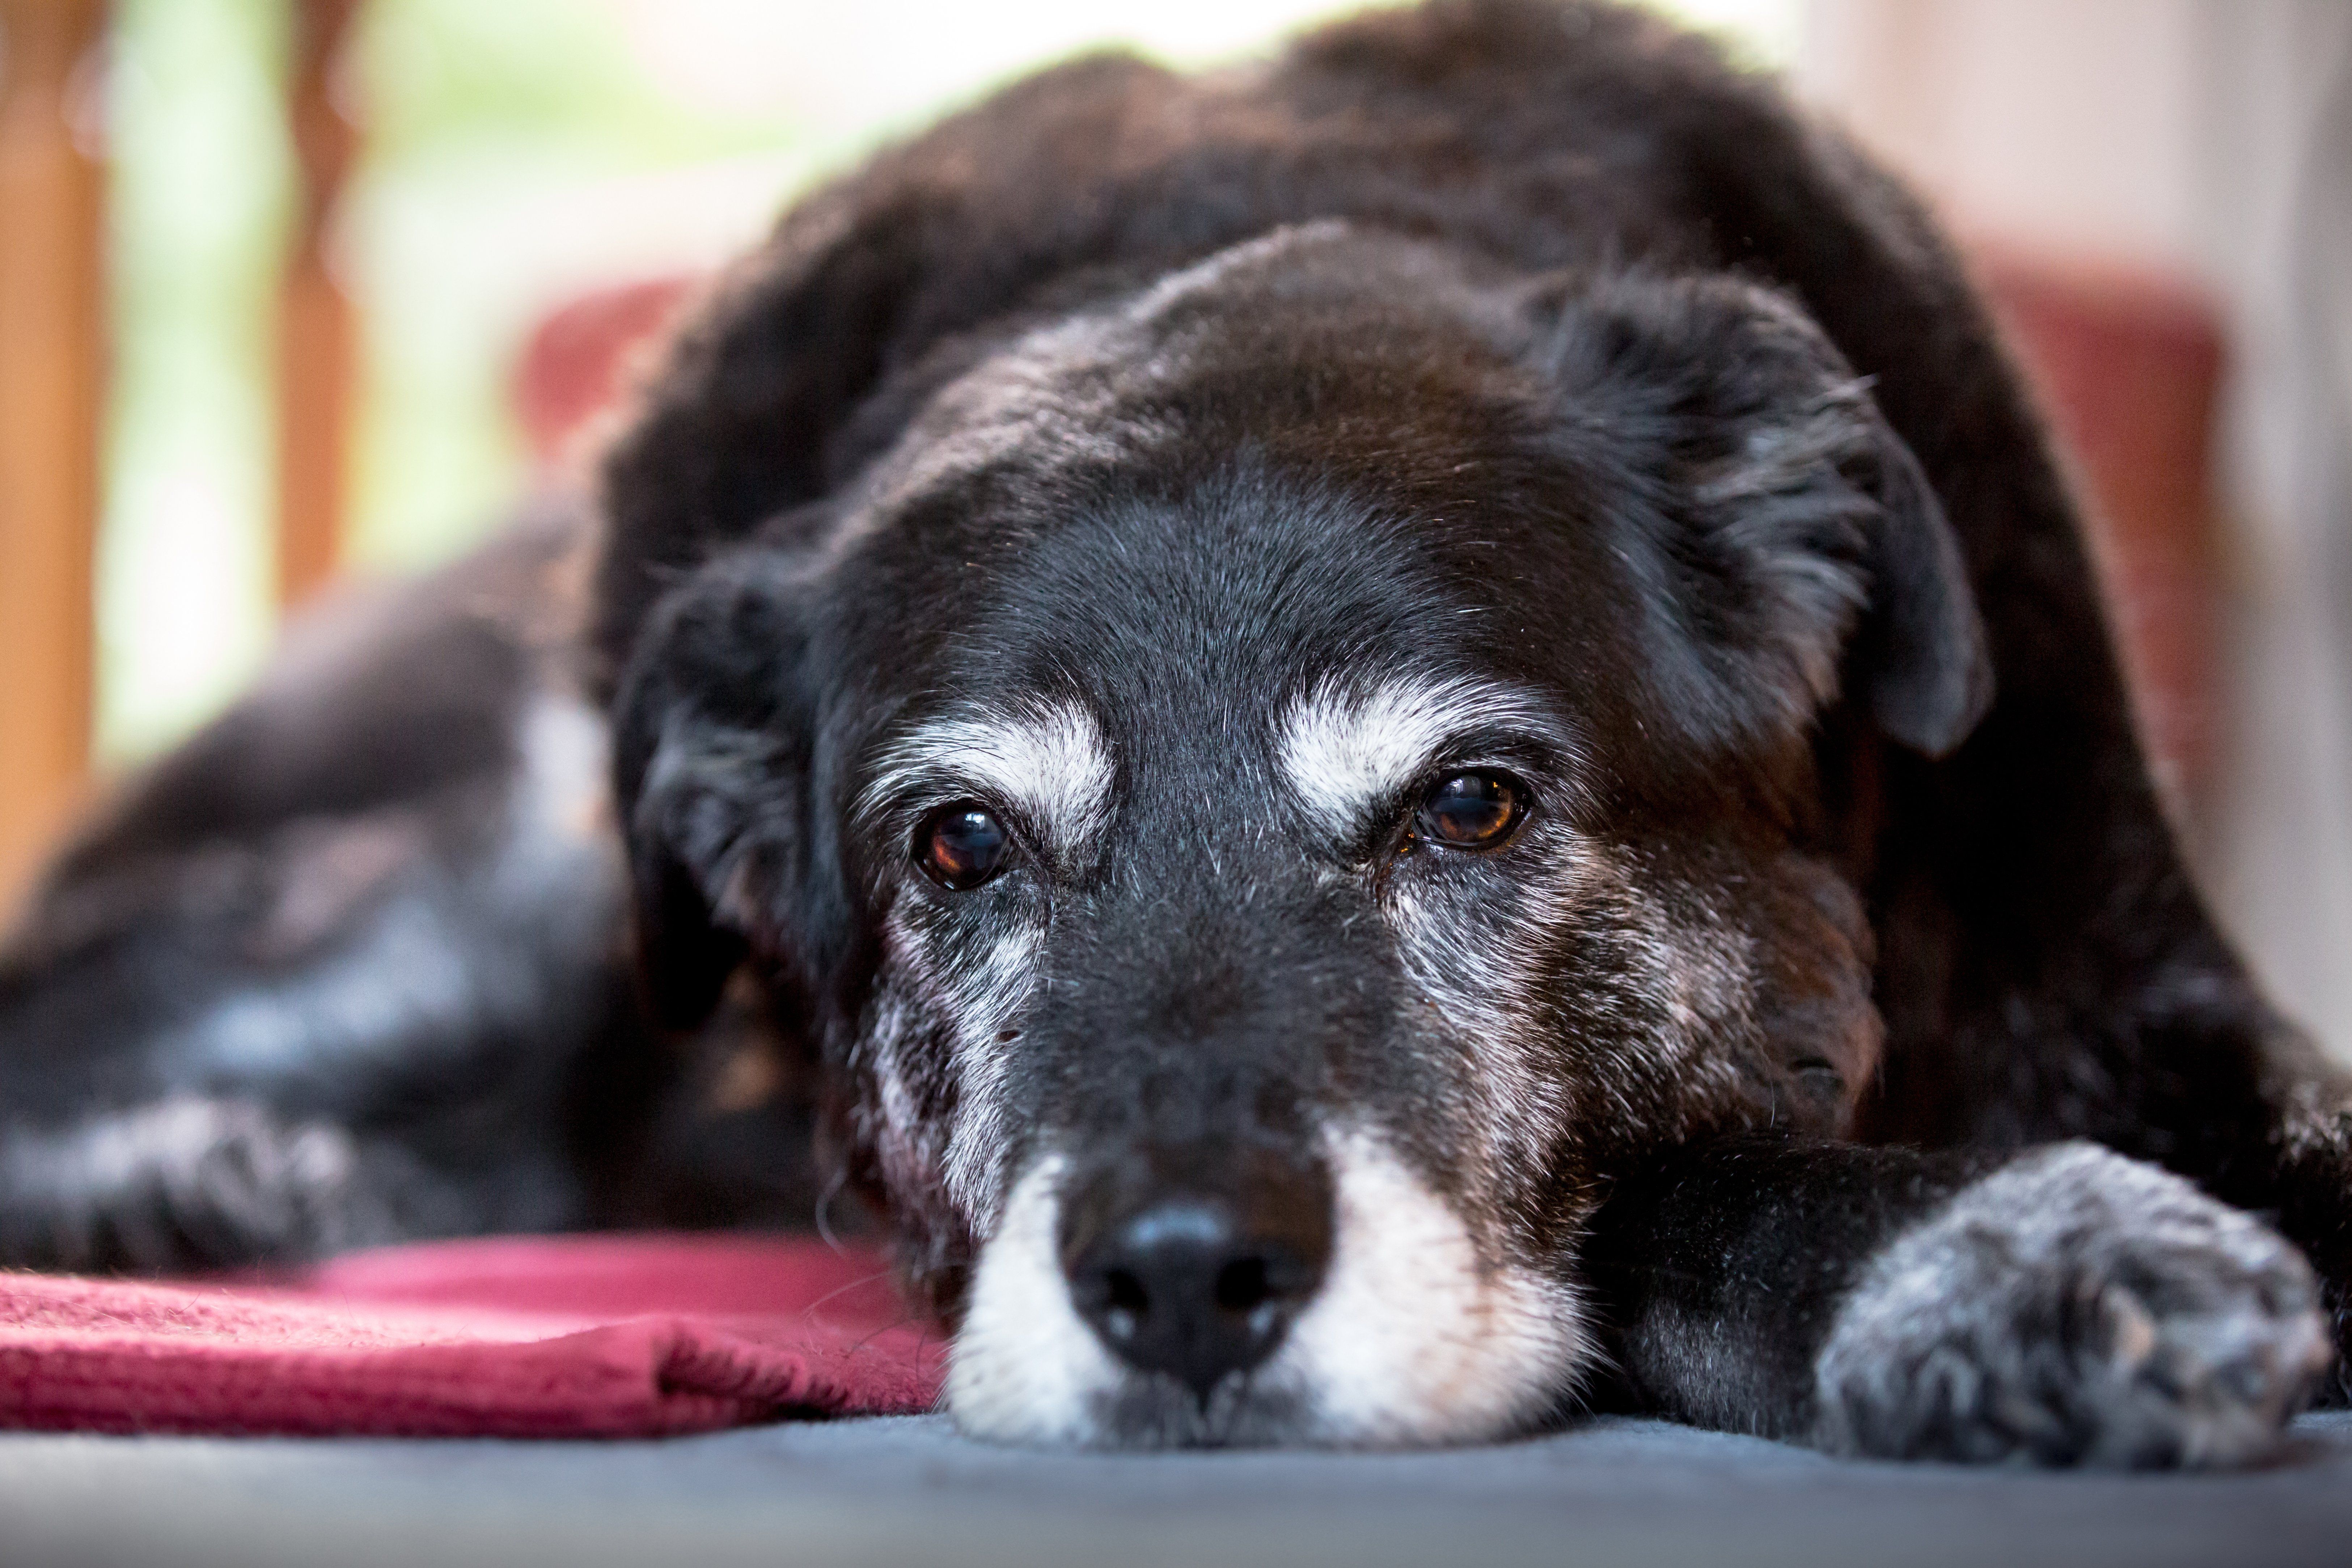 Senior Pet Care: What Changes as Pets Get Older?